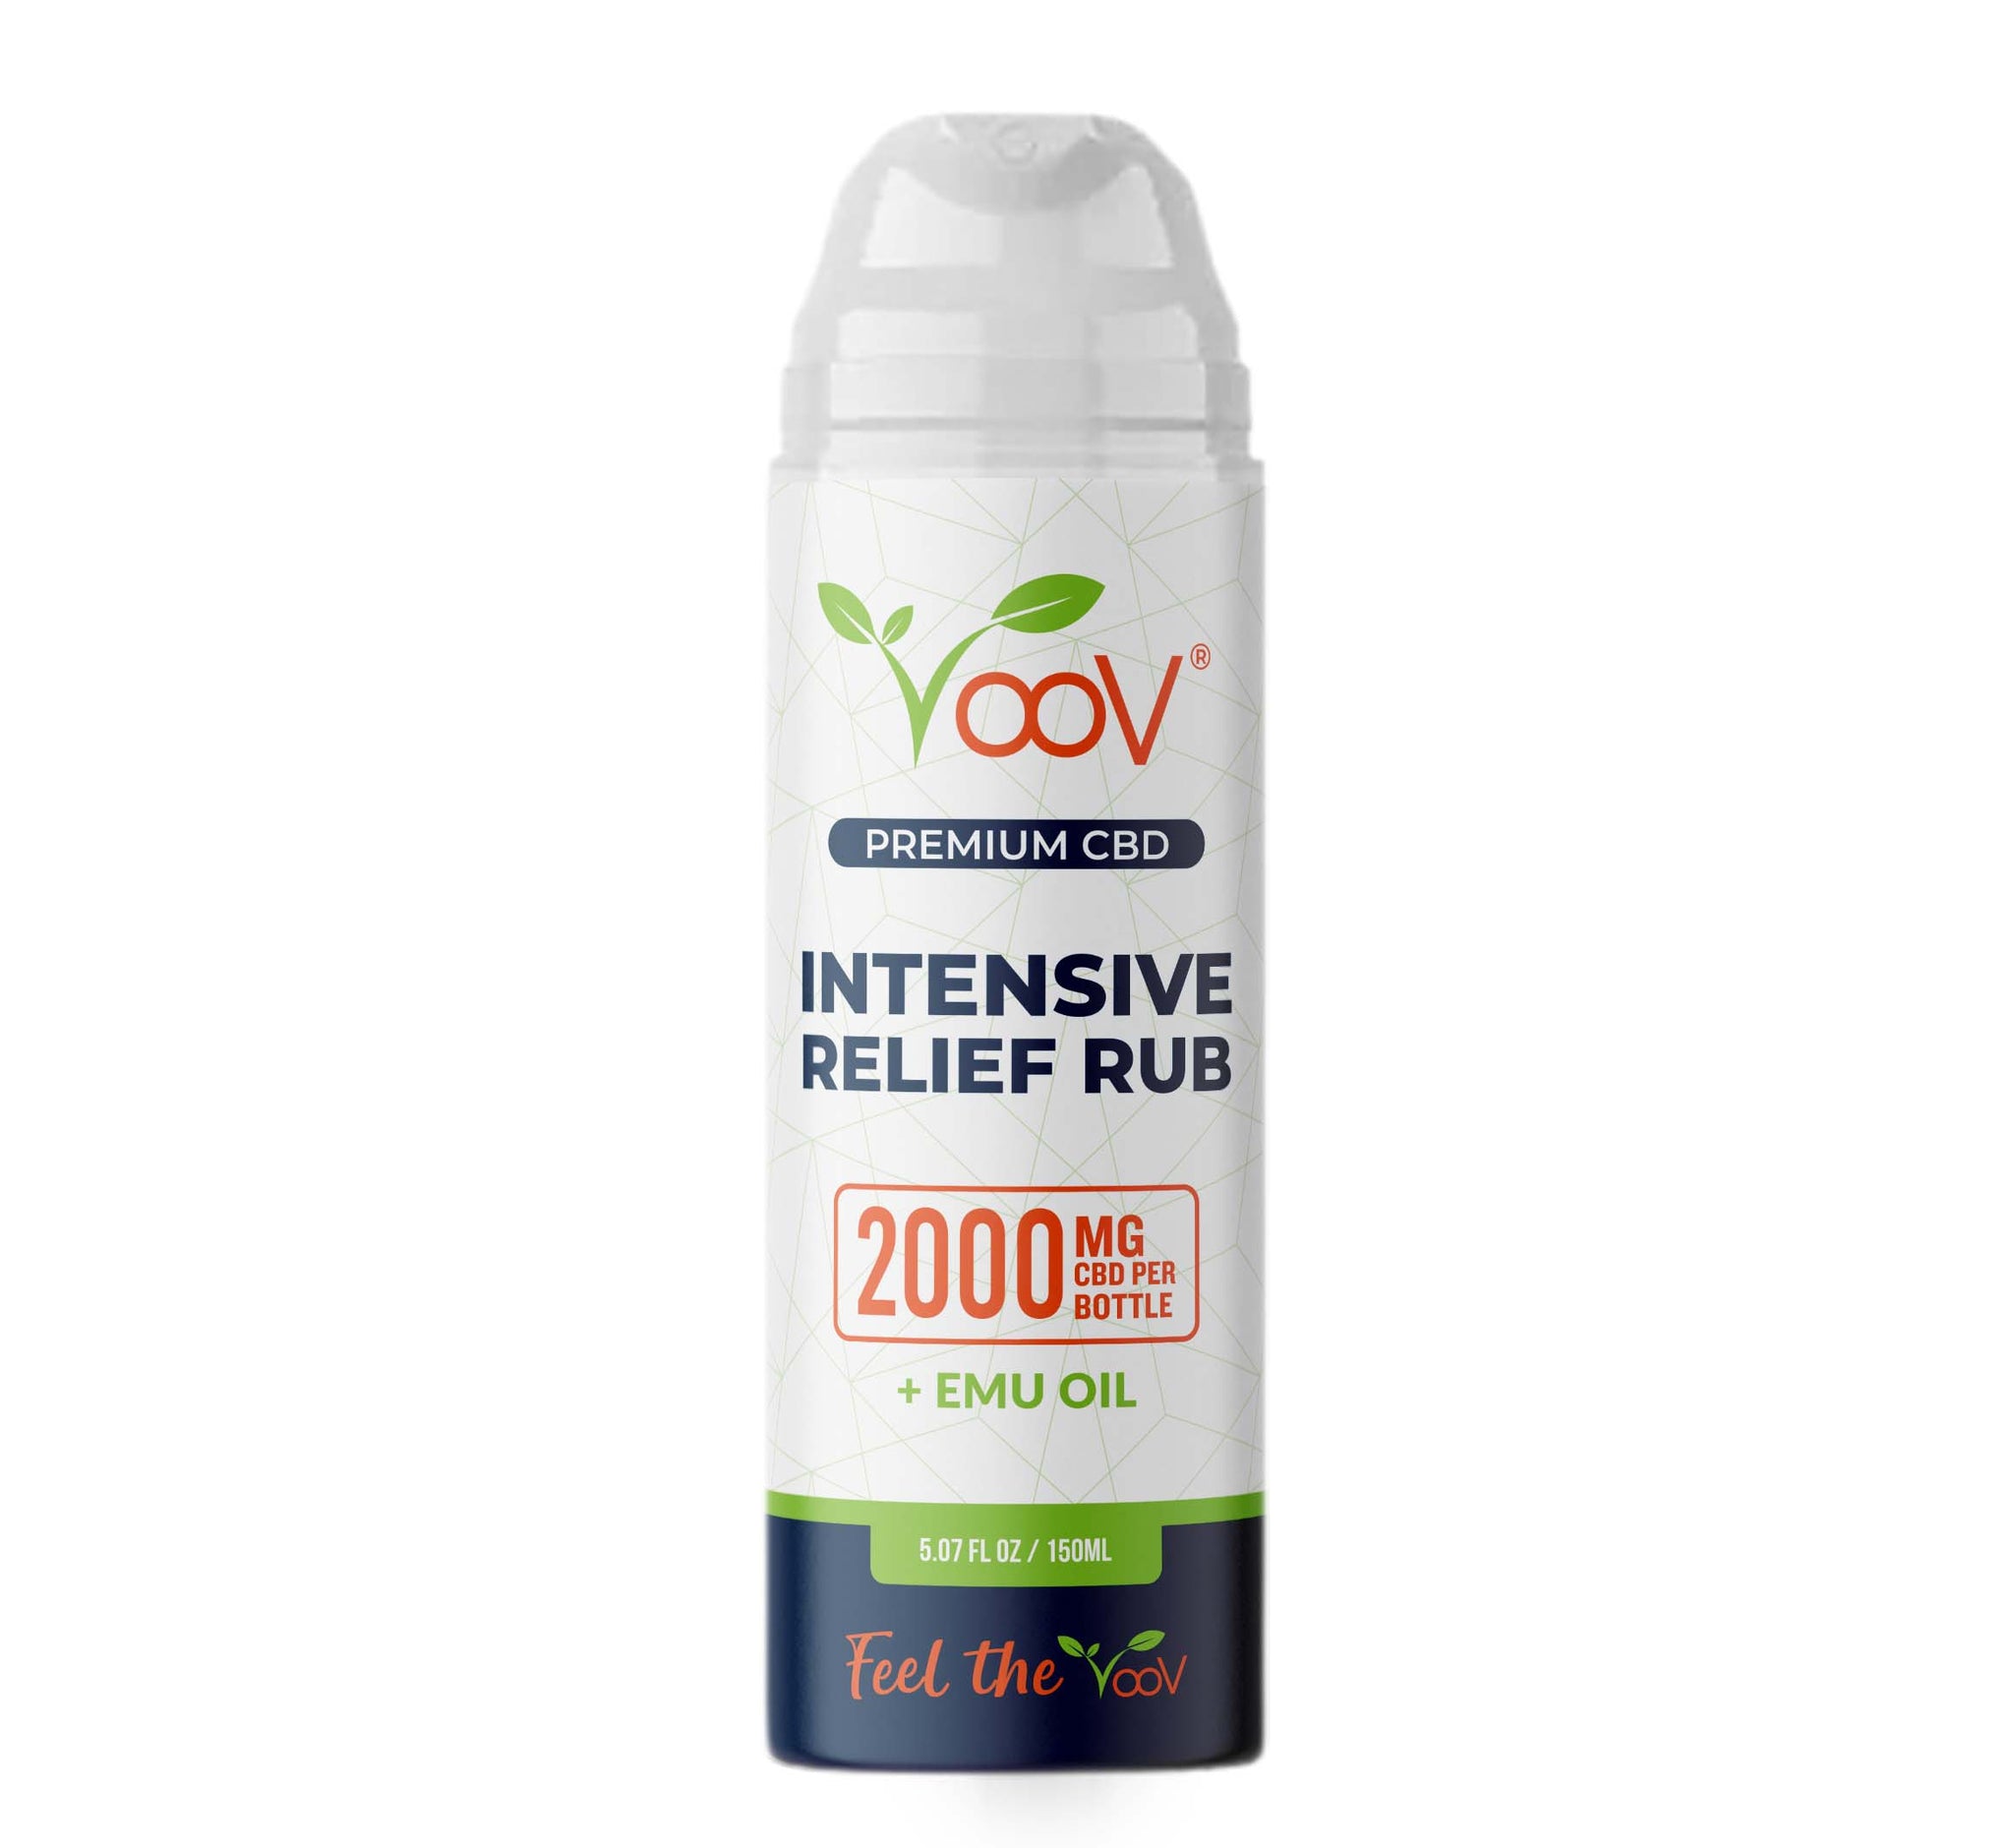 Voov CBD Intensive Relief Rub Oil 2000 mg CBD Plus EMU Oil